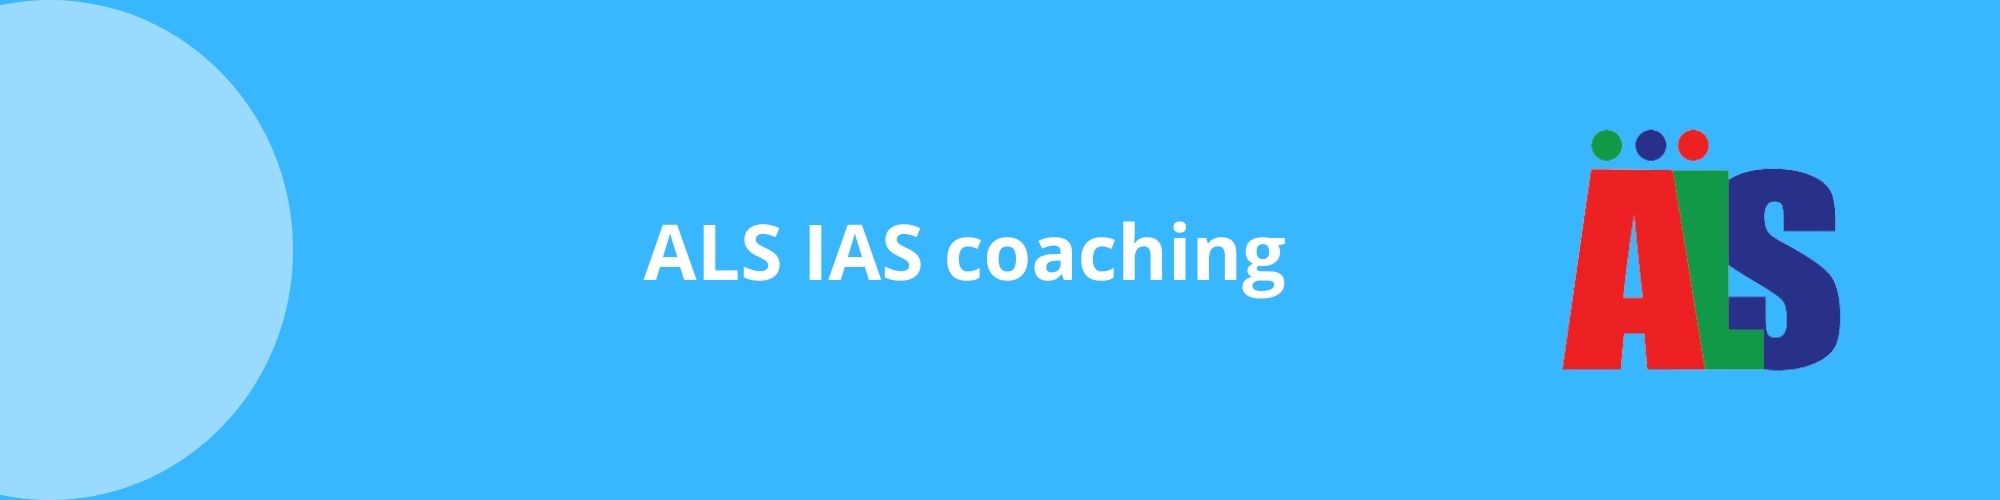 ALS IAS coaching 